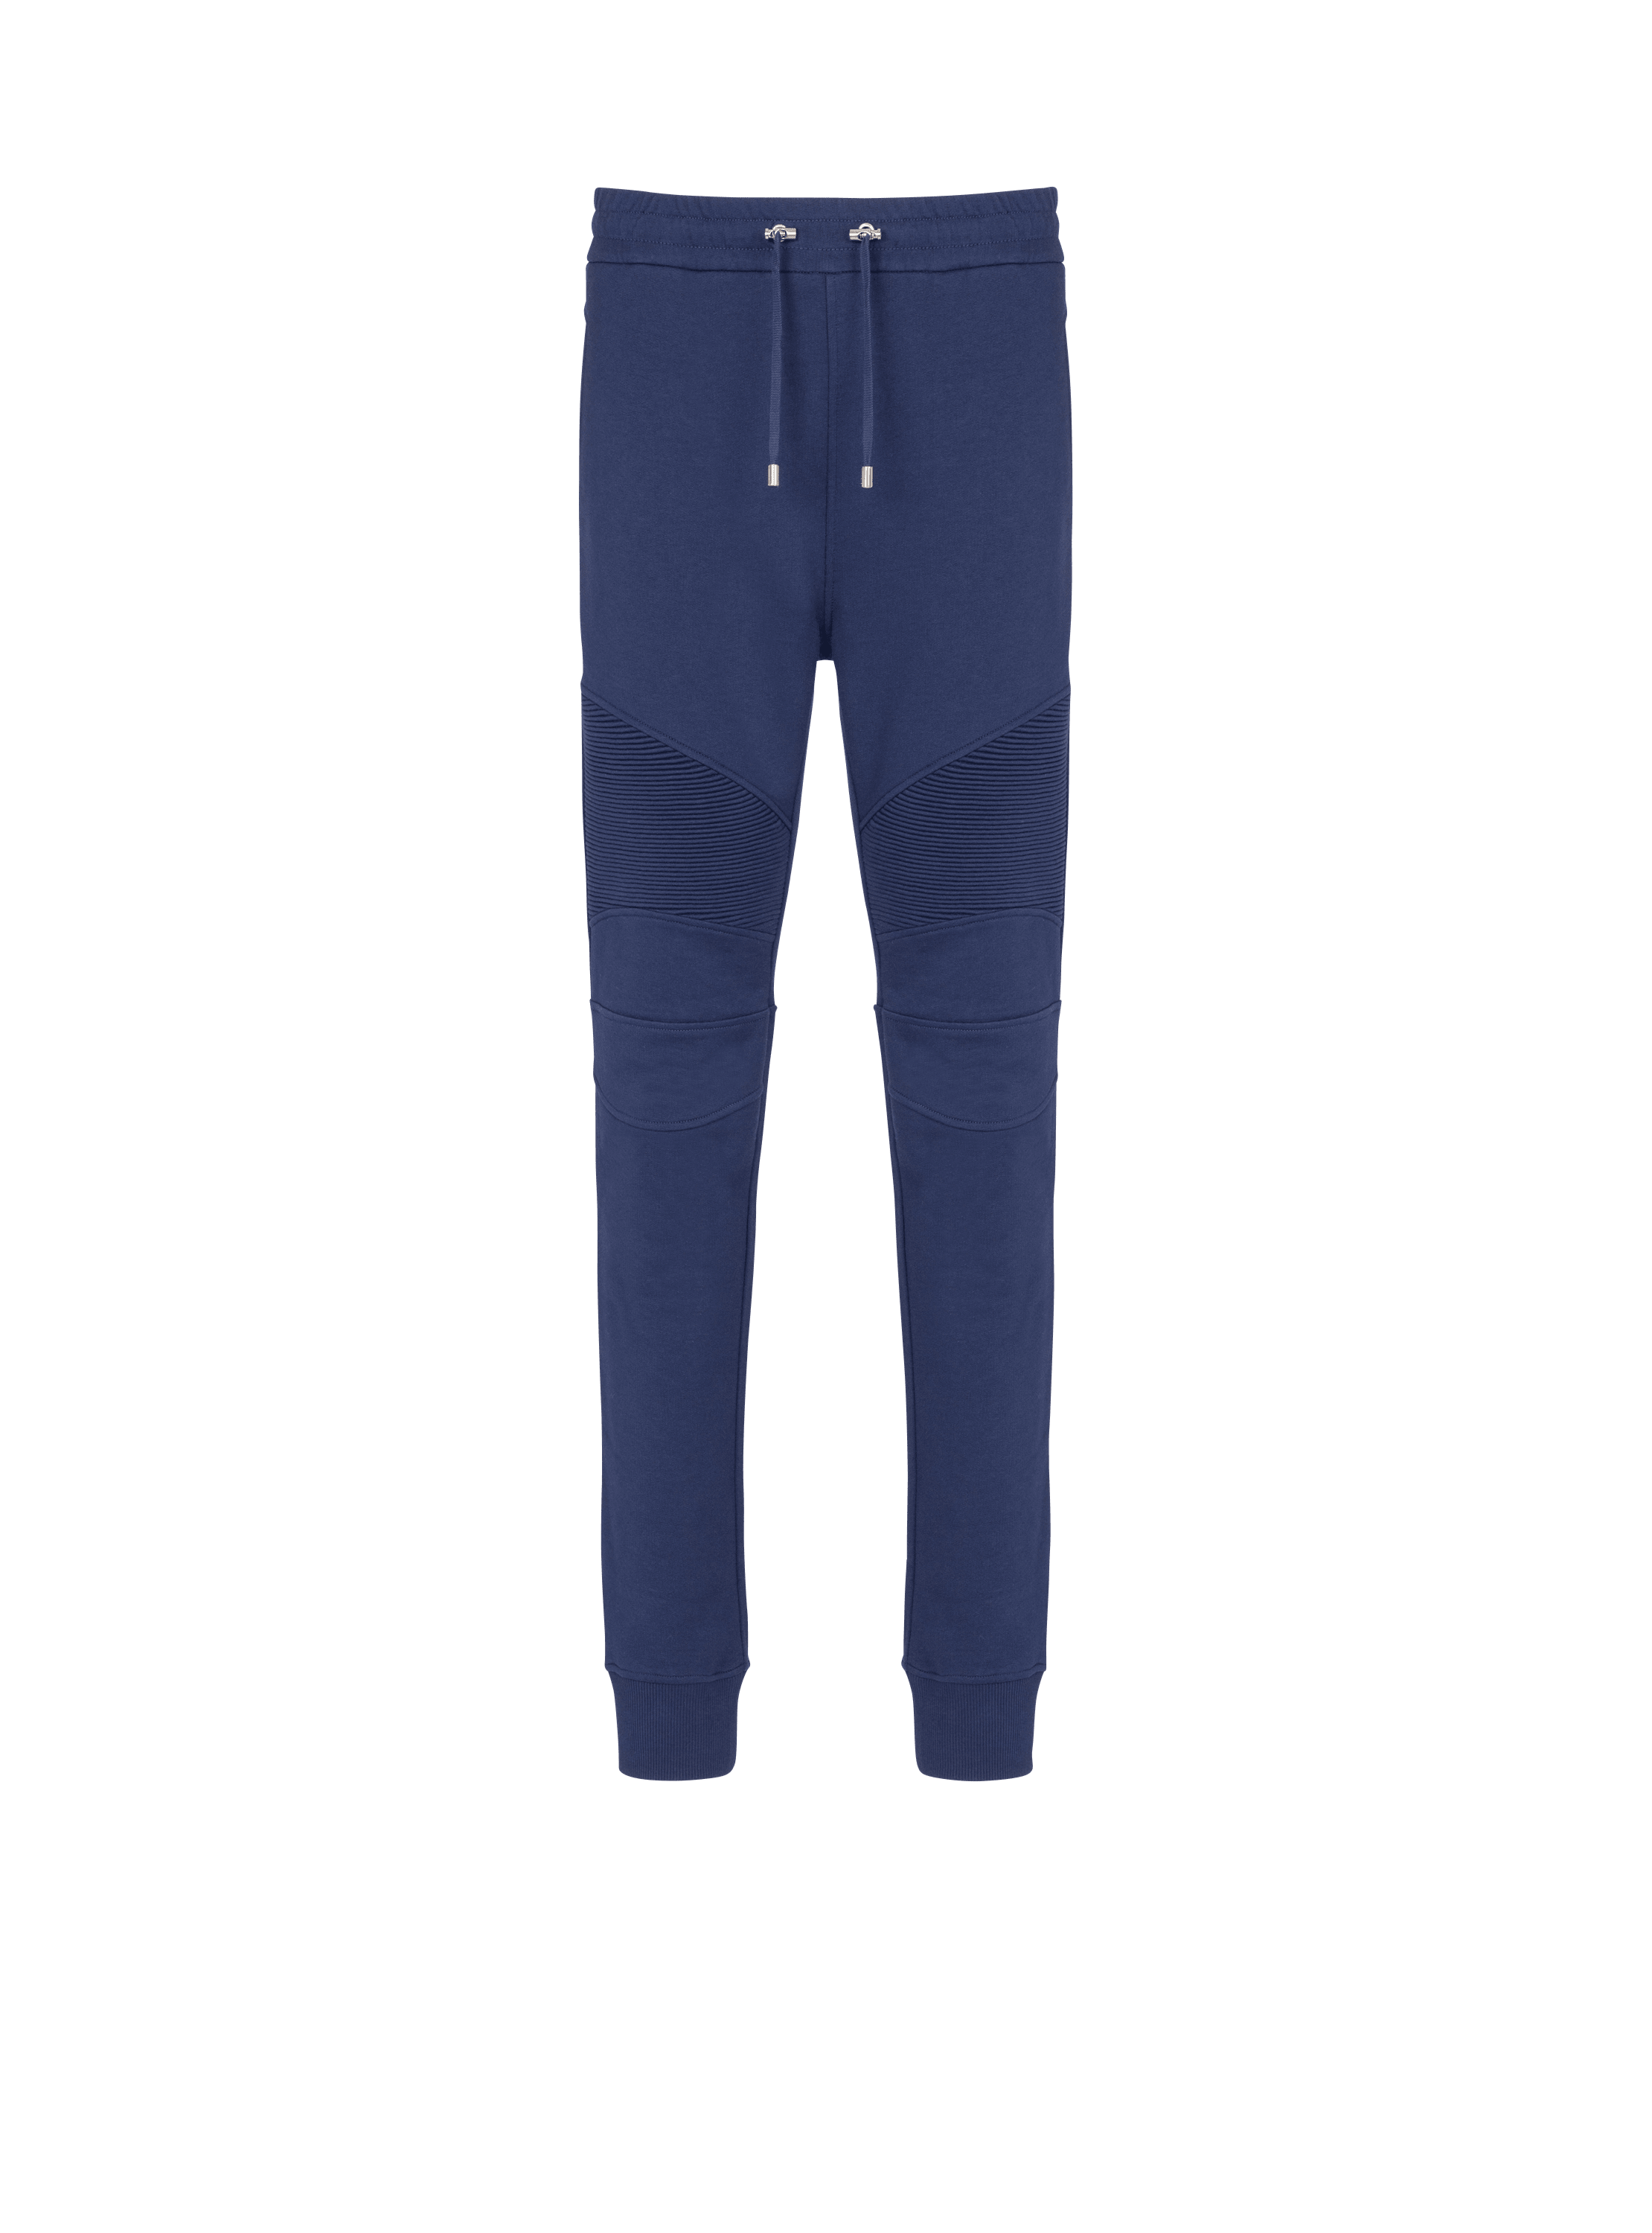 Pantaloni da jogging Balmain Paris, blu scuro, hi-res